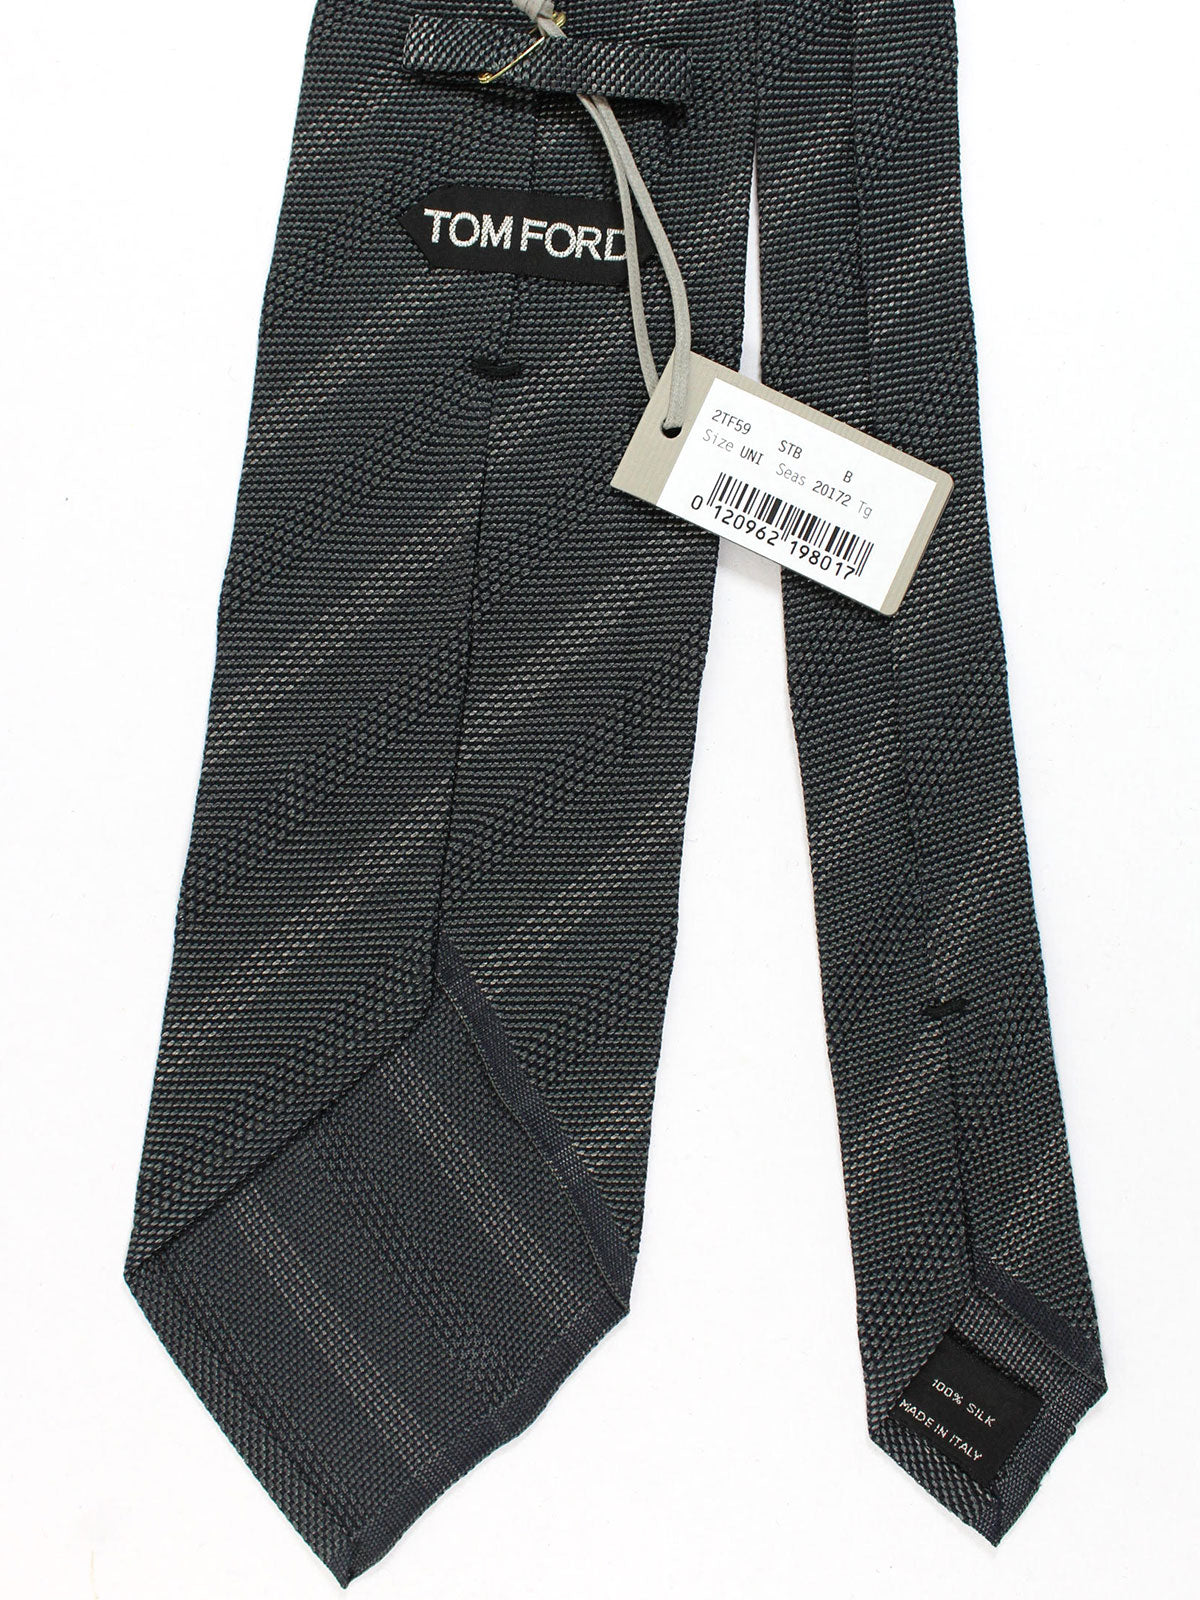 Tom Ford Ties Sale | Bow Ties | Dress Shirts SALE - Tie Deals